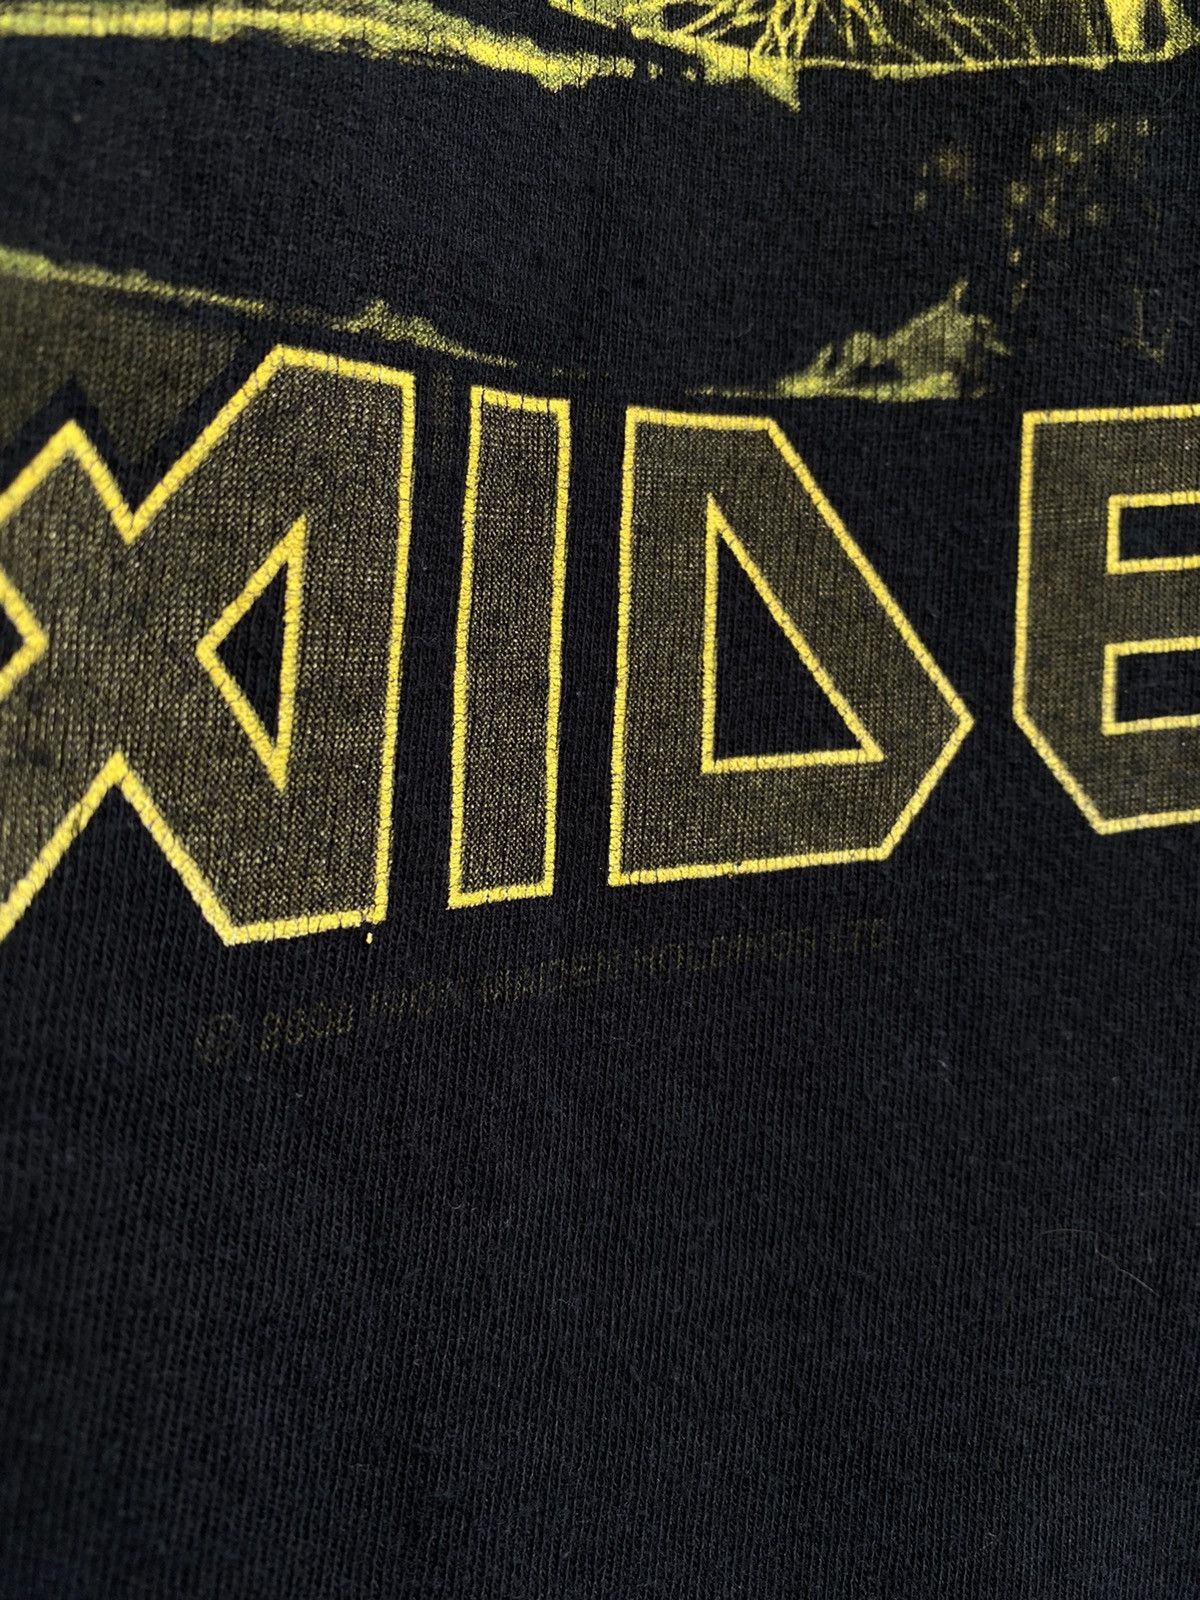 Vintage Vintage Iron Maiden “Aces High “ 2010 Band T Shirt Size US XL / EU 56 / 4 - 4 Thumbnail